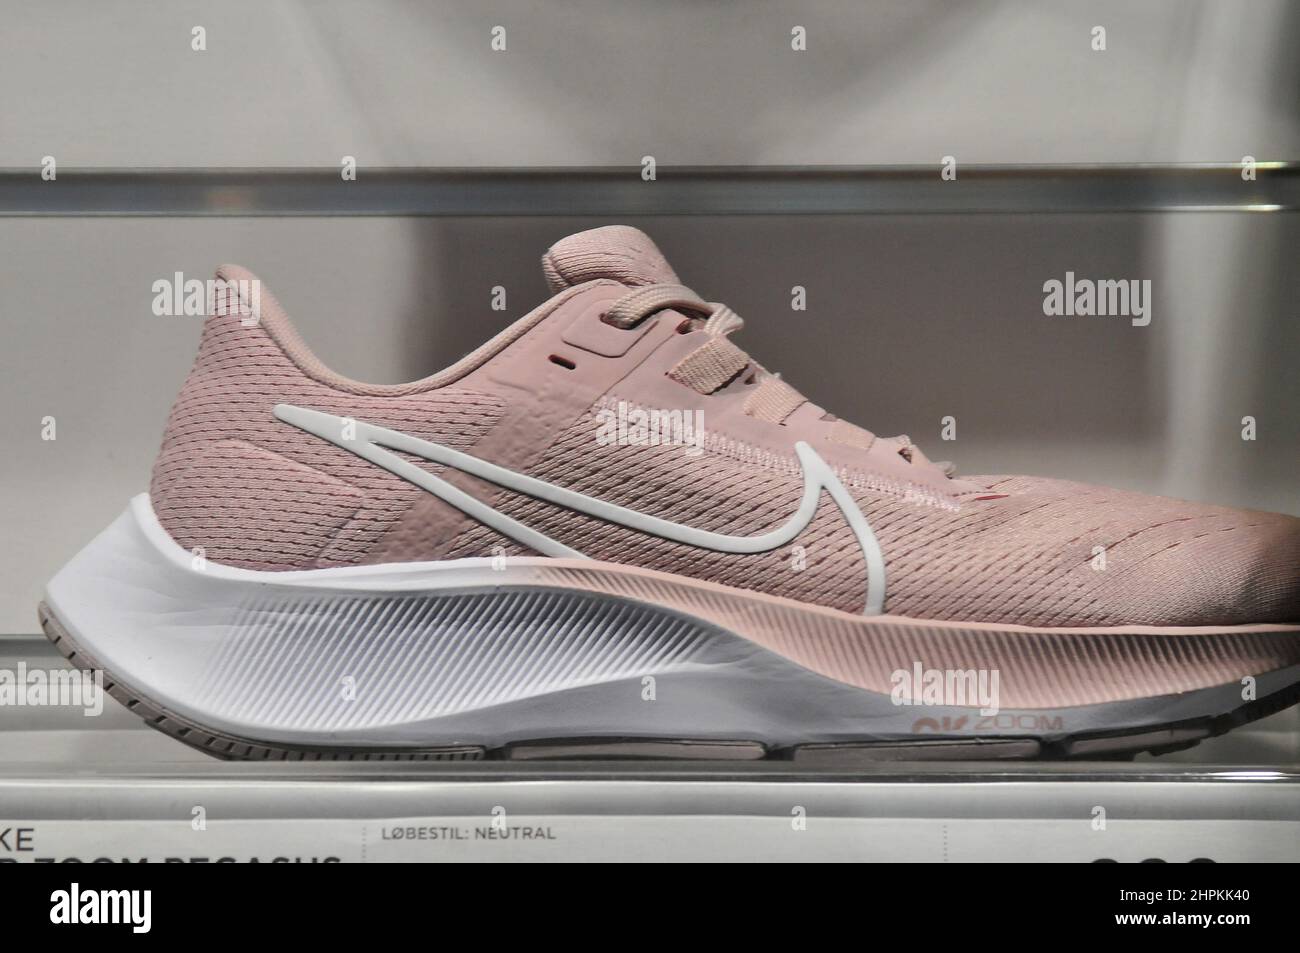 Begunstigde tragedie levering Nike shopes hi-res stock photography and images - Alamy